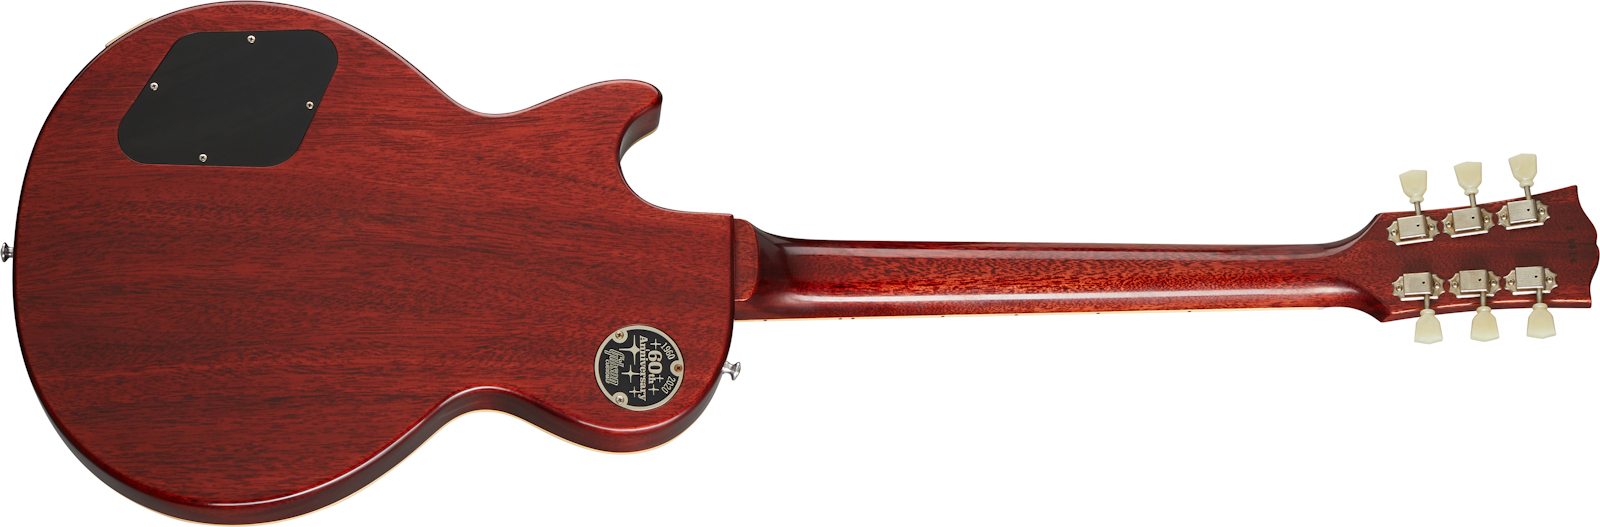 Gibson Custom Shop Les Paul Standard 1960 V1 60th Anniversary 2h Ht Rw - Vos Antiquity Burst - Single-Cut-E-Gitarre - Variation 1